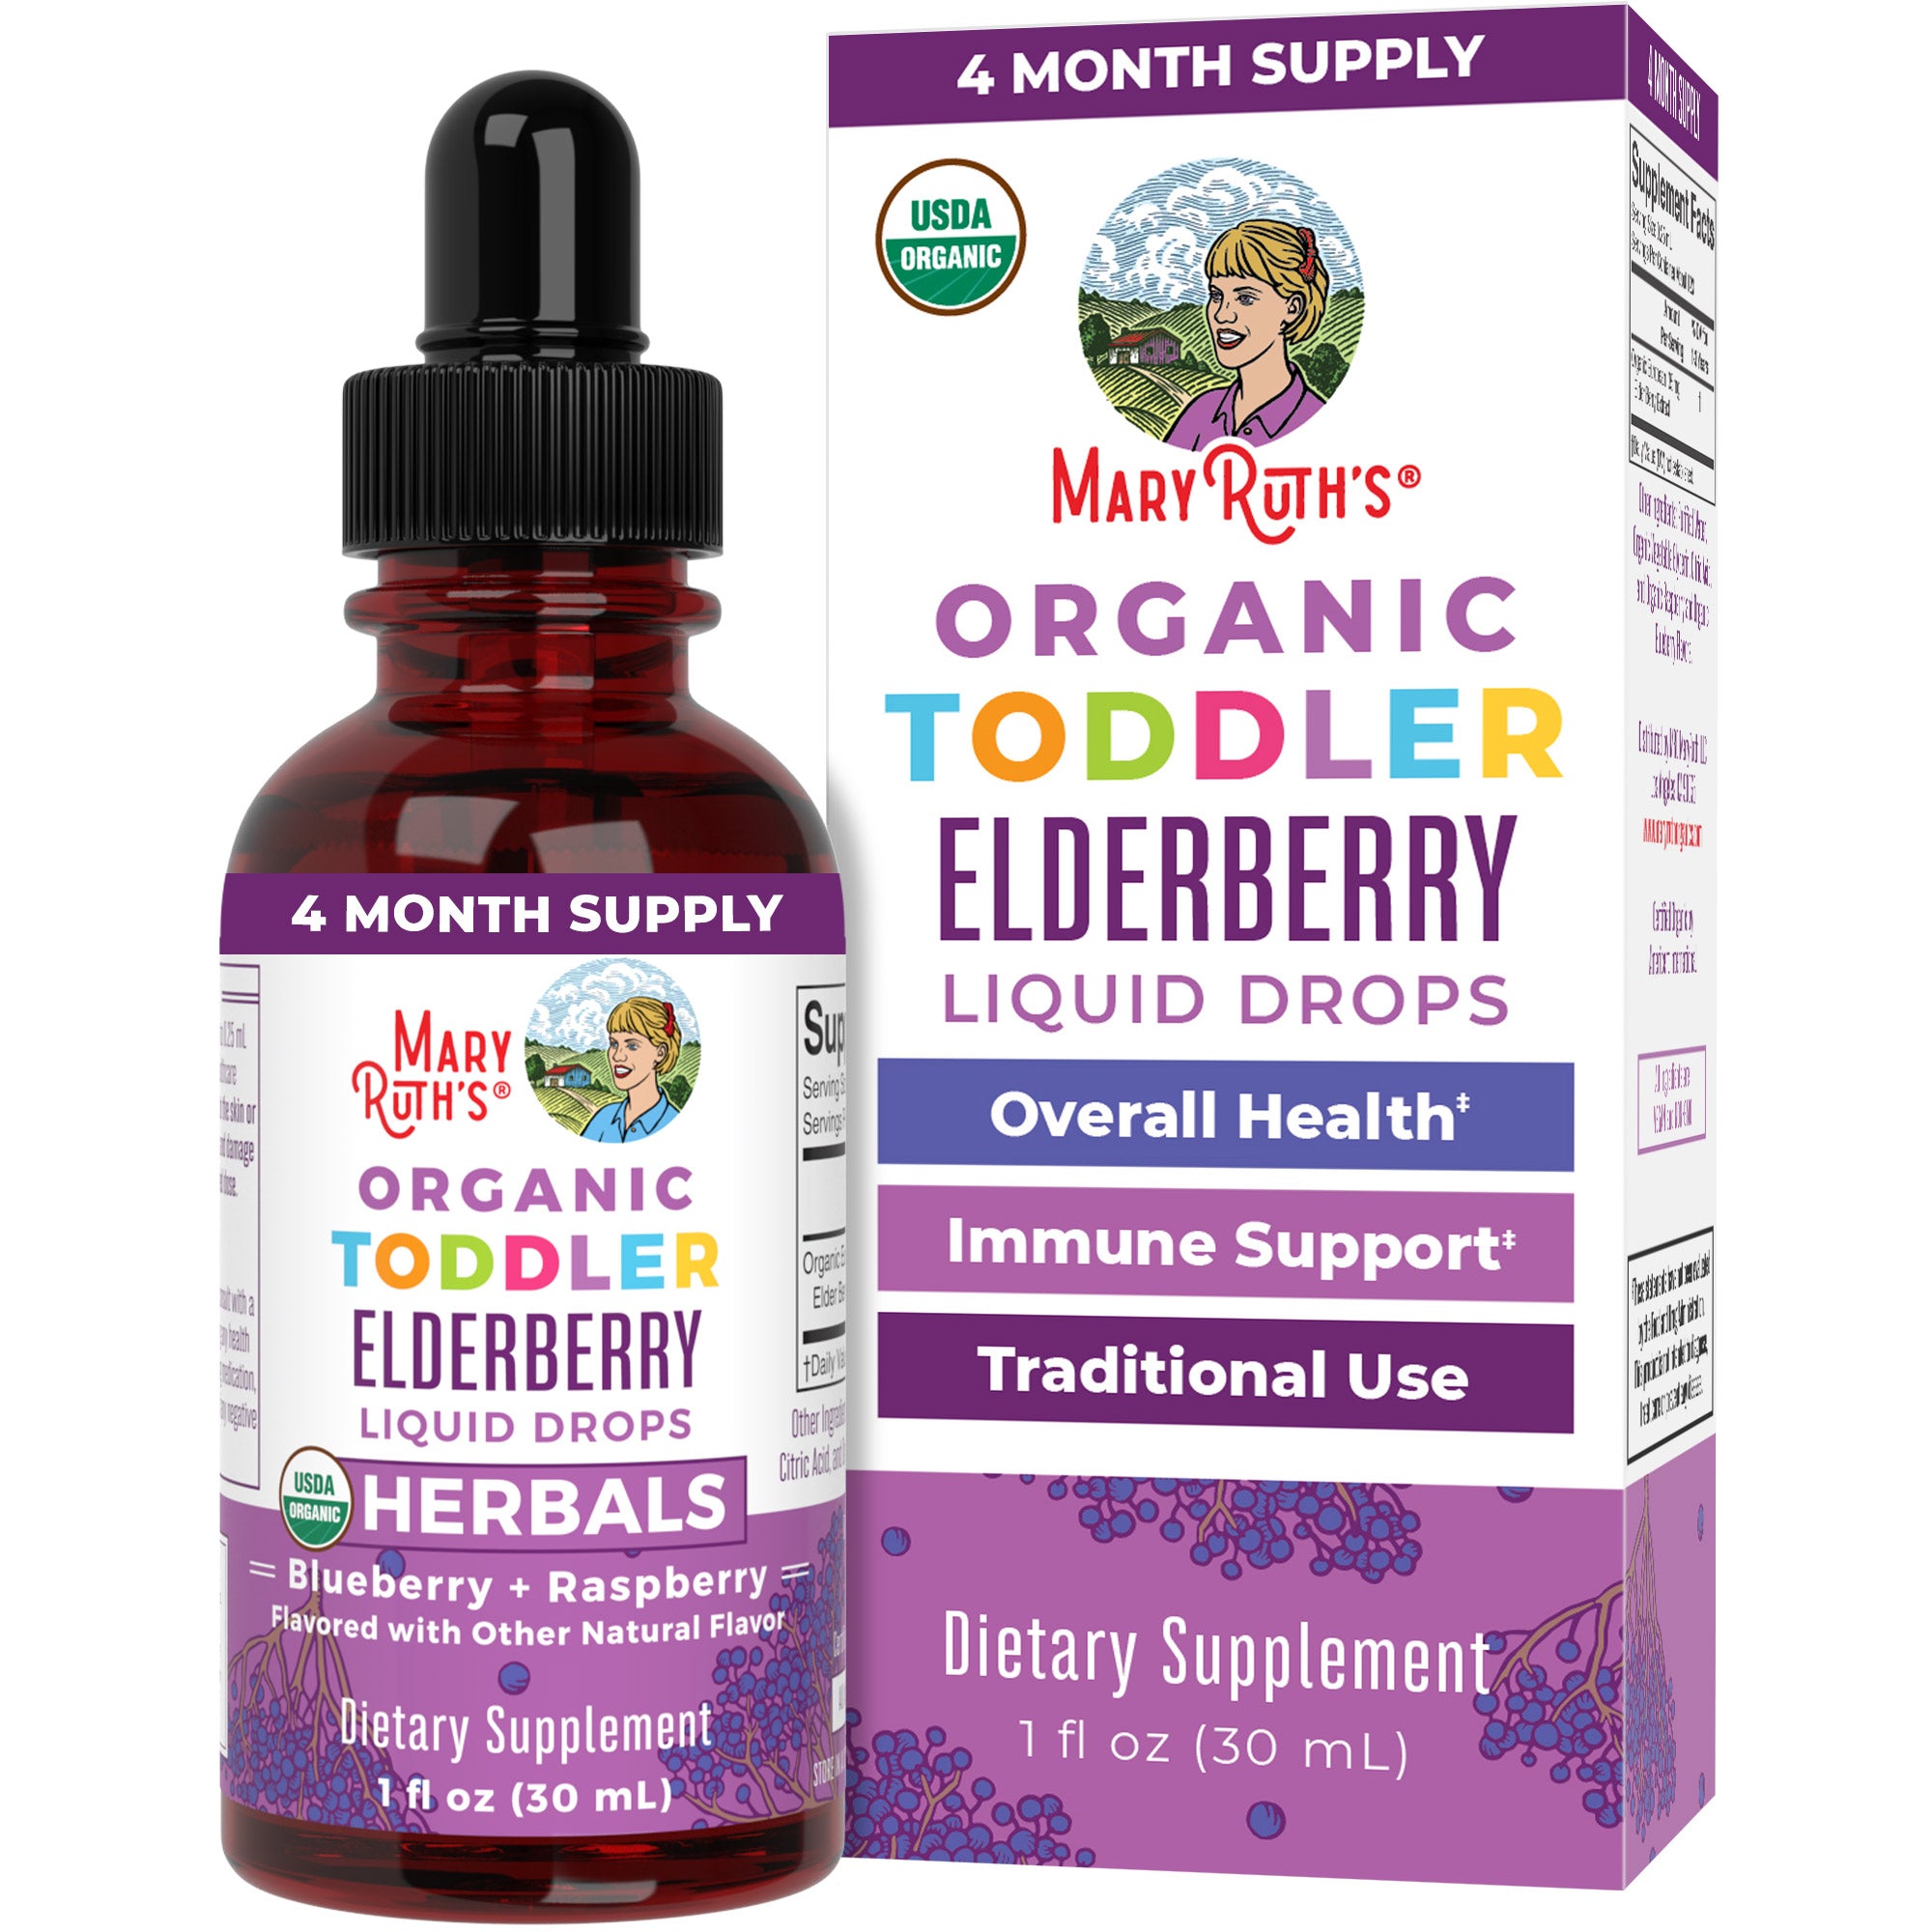 Organic Toddler Elderberry Liquid Drops